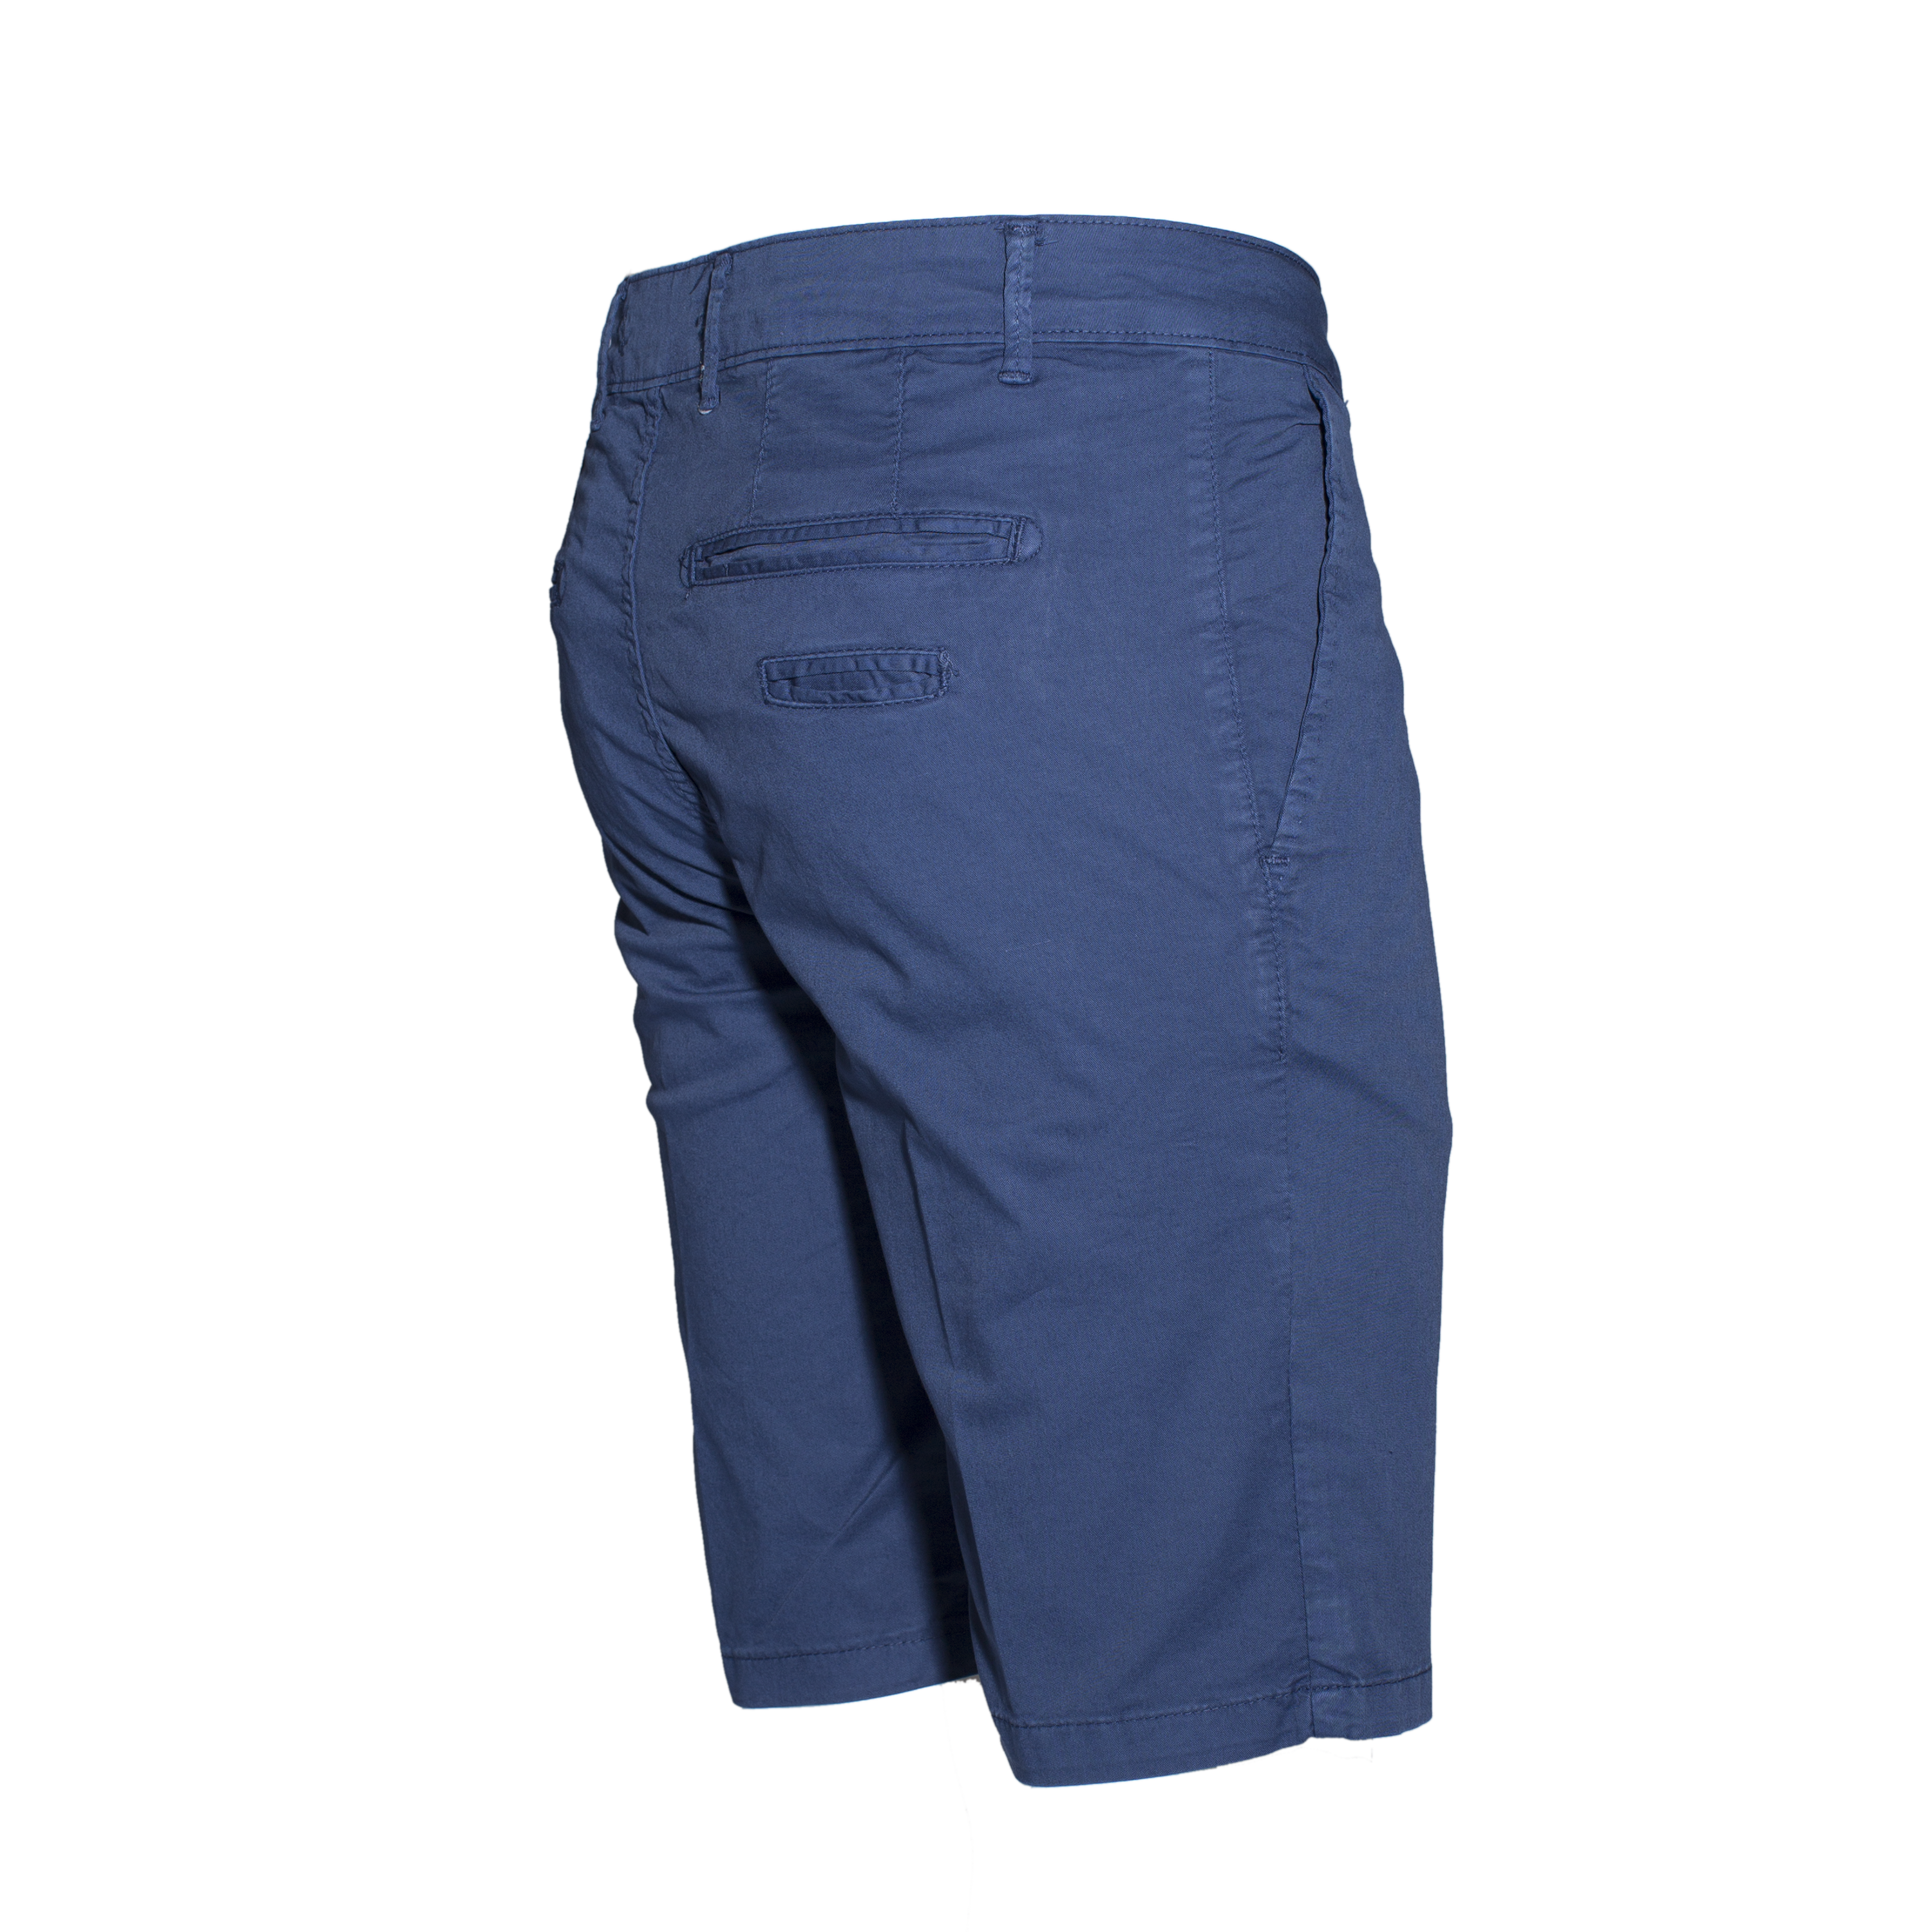 Bermuda in Cotone Blu Pantaloncini Uomo